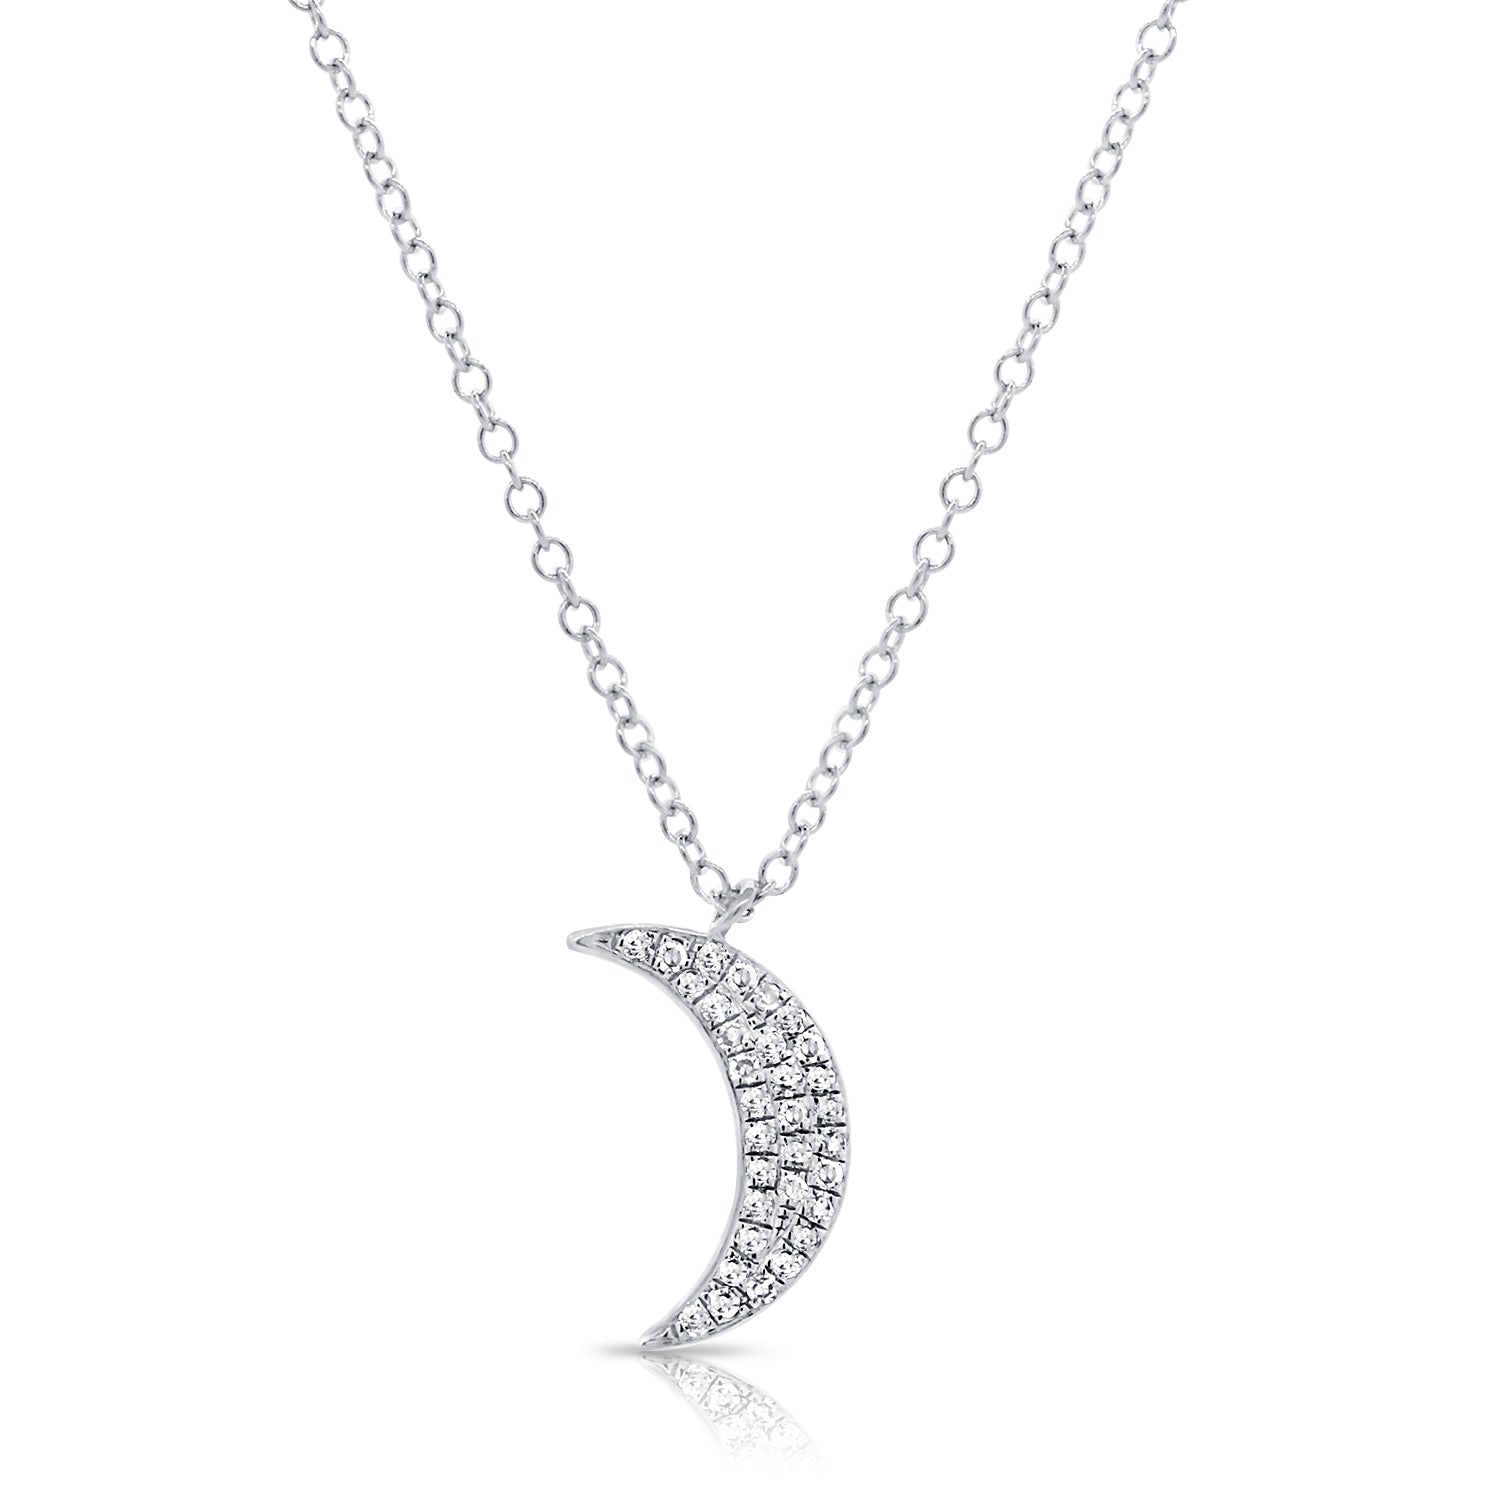 14k Gold & Diamond Moon Necklace - 0.10ct